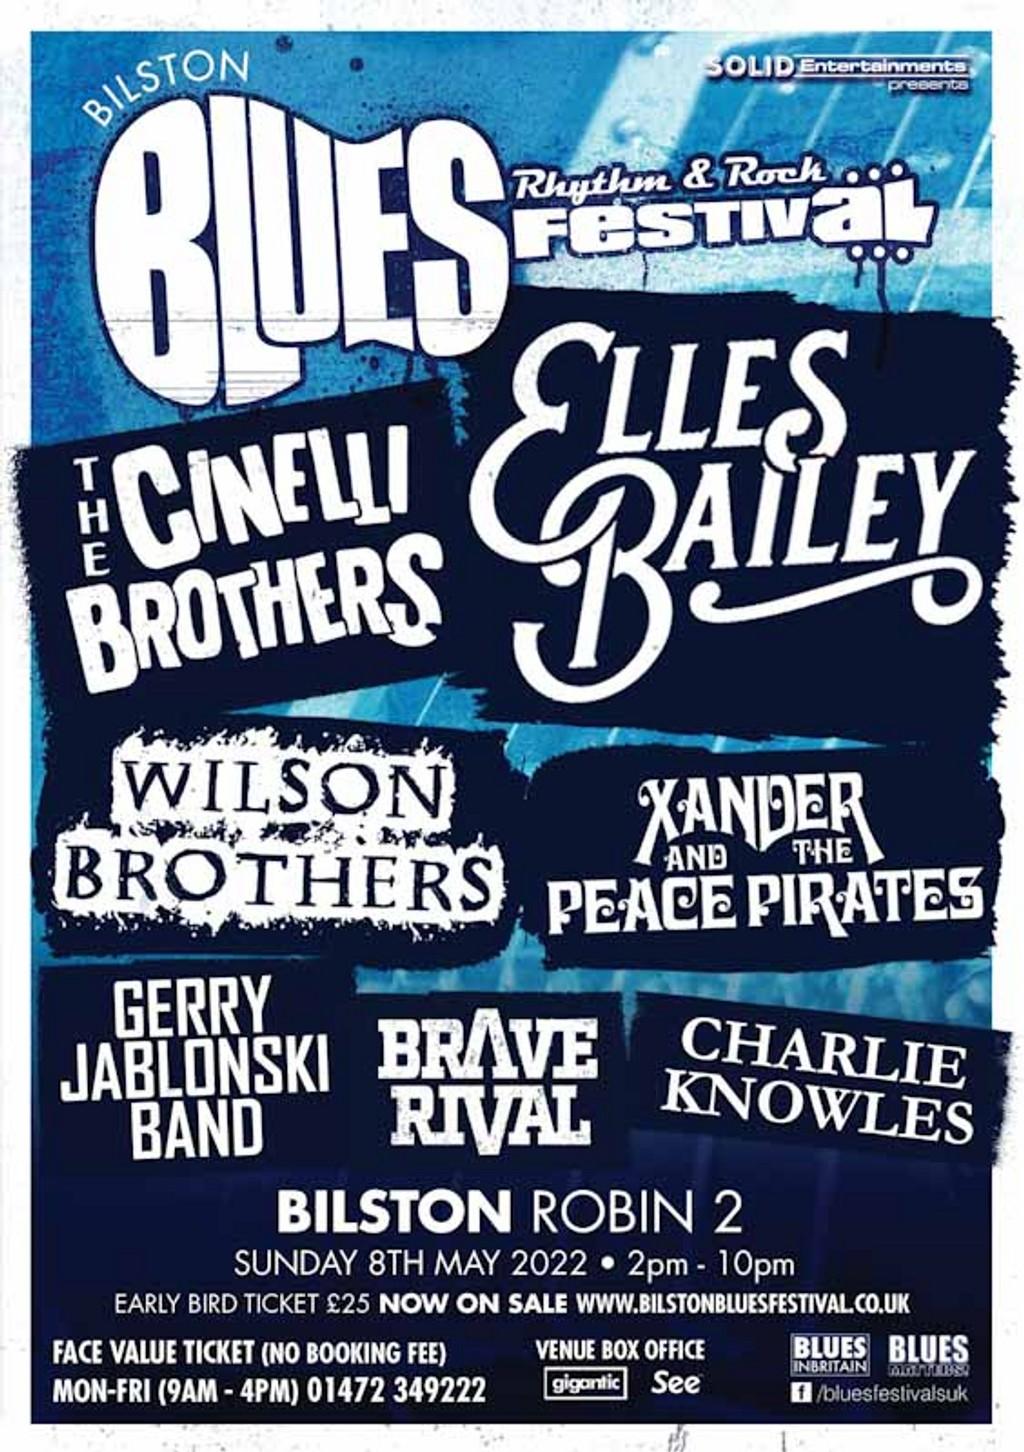 Lineup Poster Bilston Blues, Rhythm & Rock Festival 2022